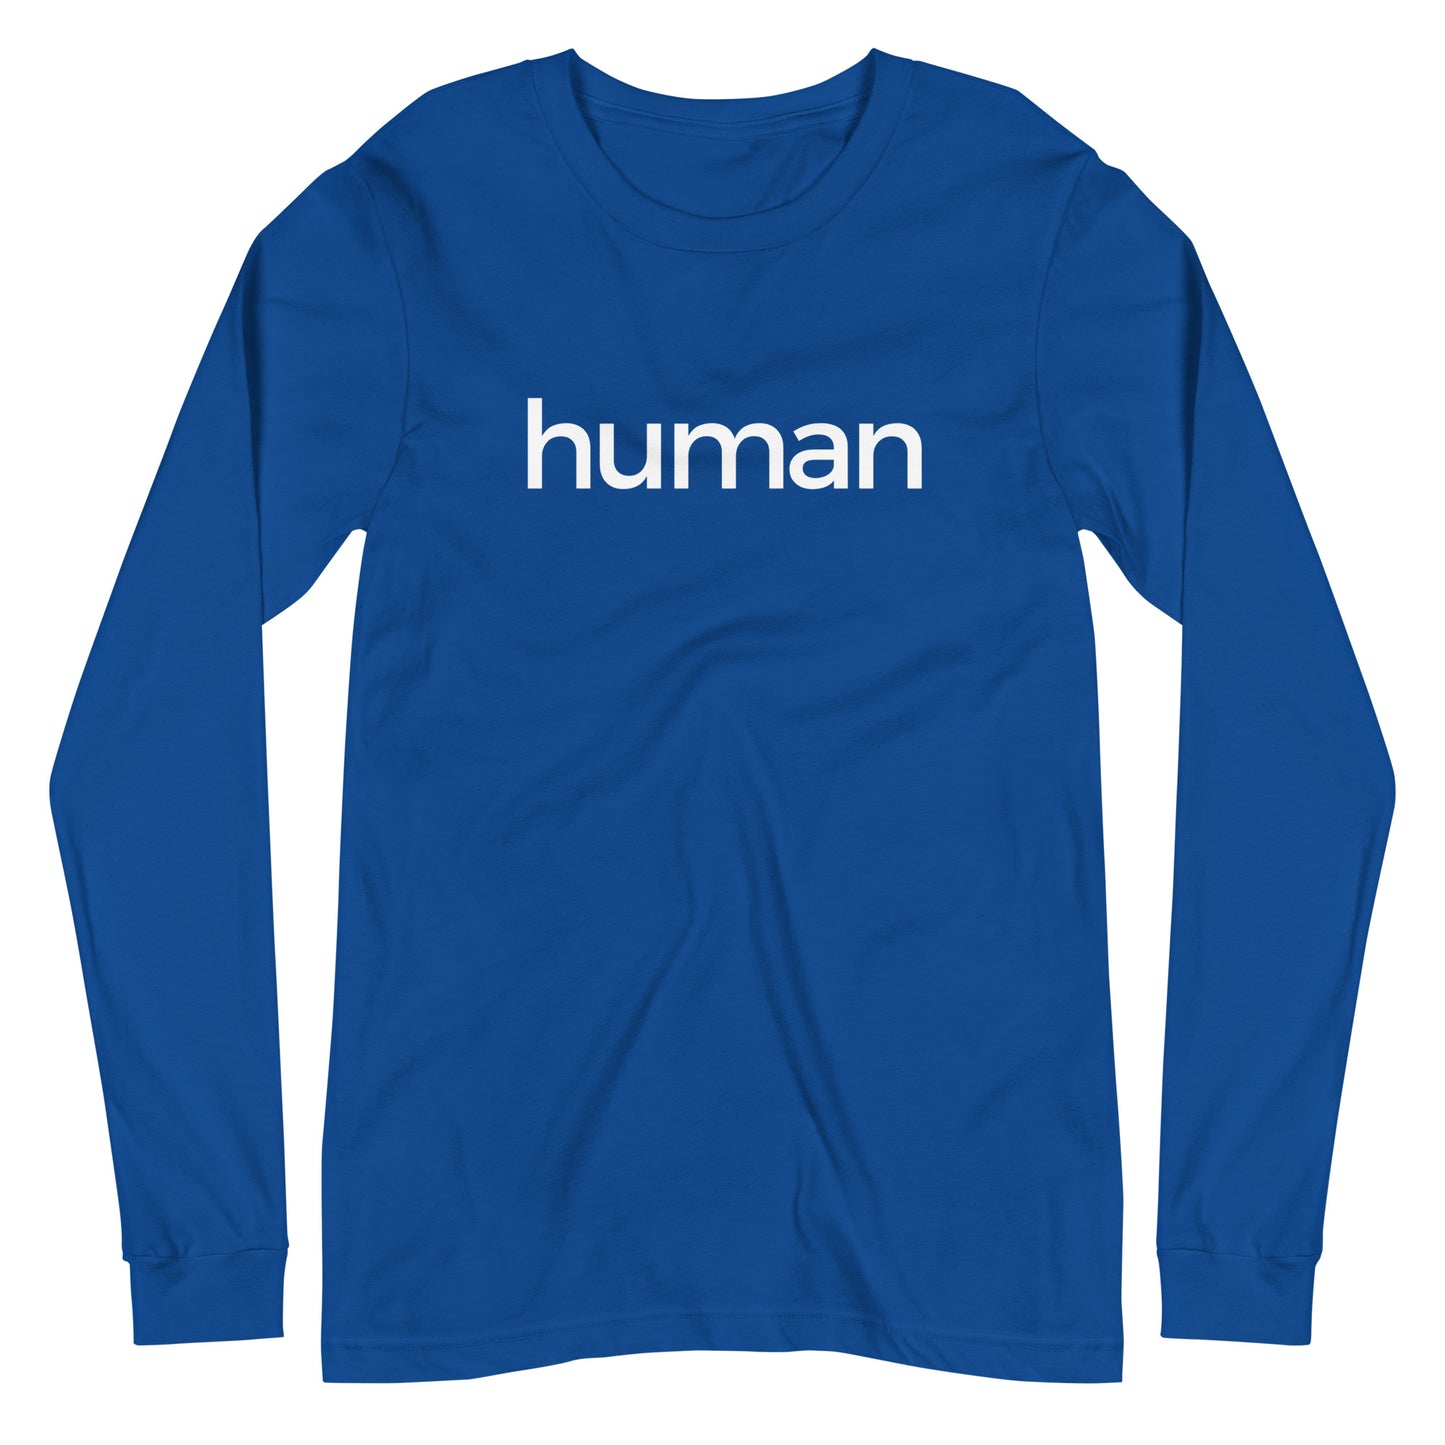 Human - Long Sleeve T-Shirt